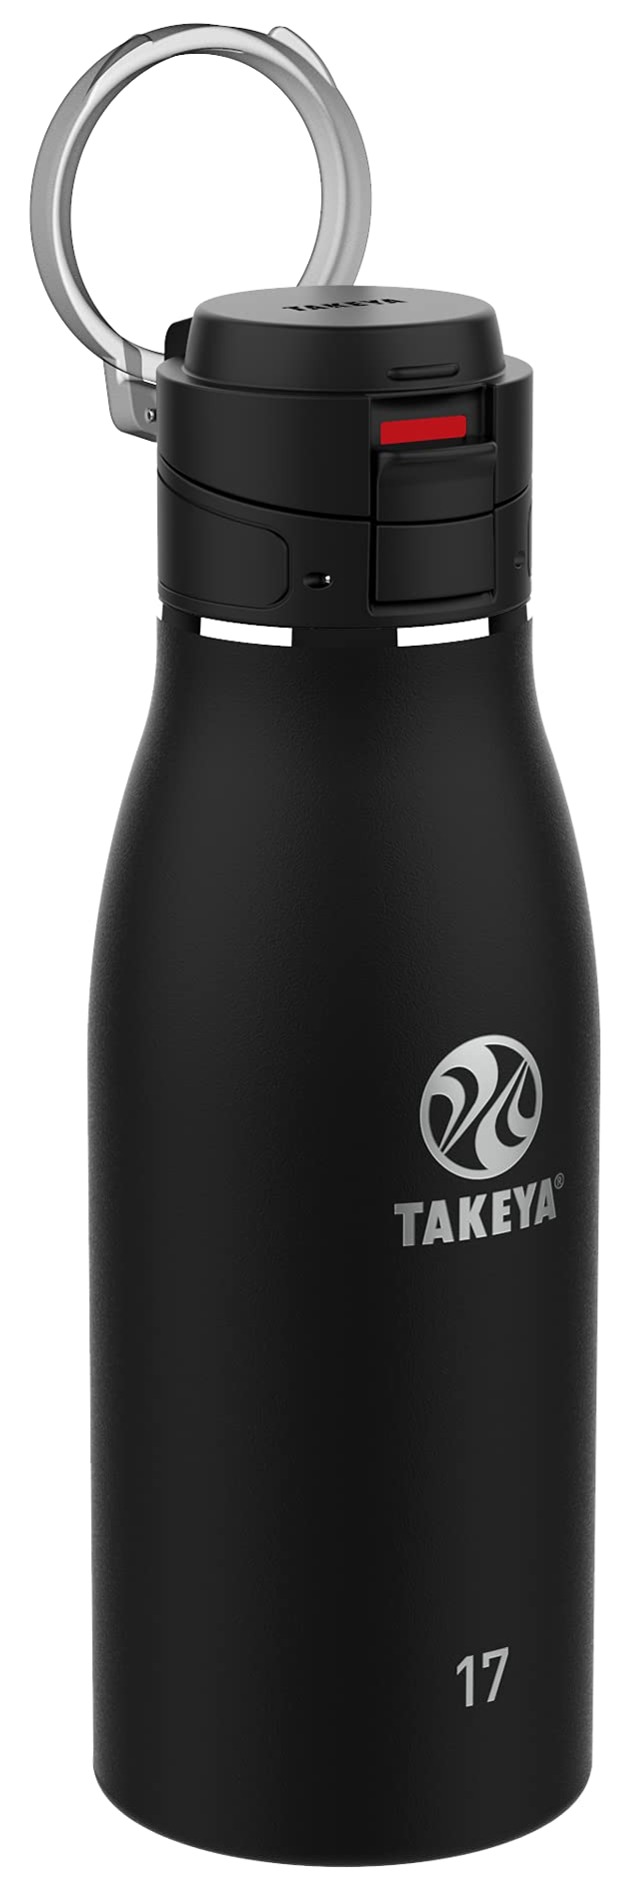 Takeya Traveler Insulated Coffee Mug, Leak Proof Lid, BPA Free, 17 Ounce, Onyx $11.99 at Amazon